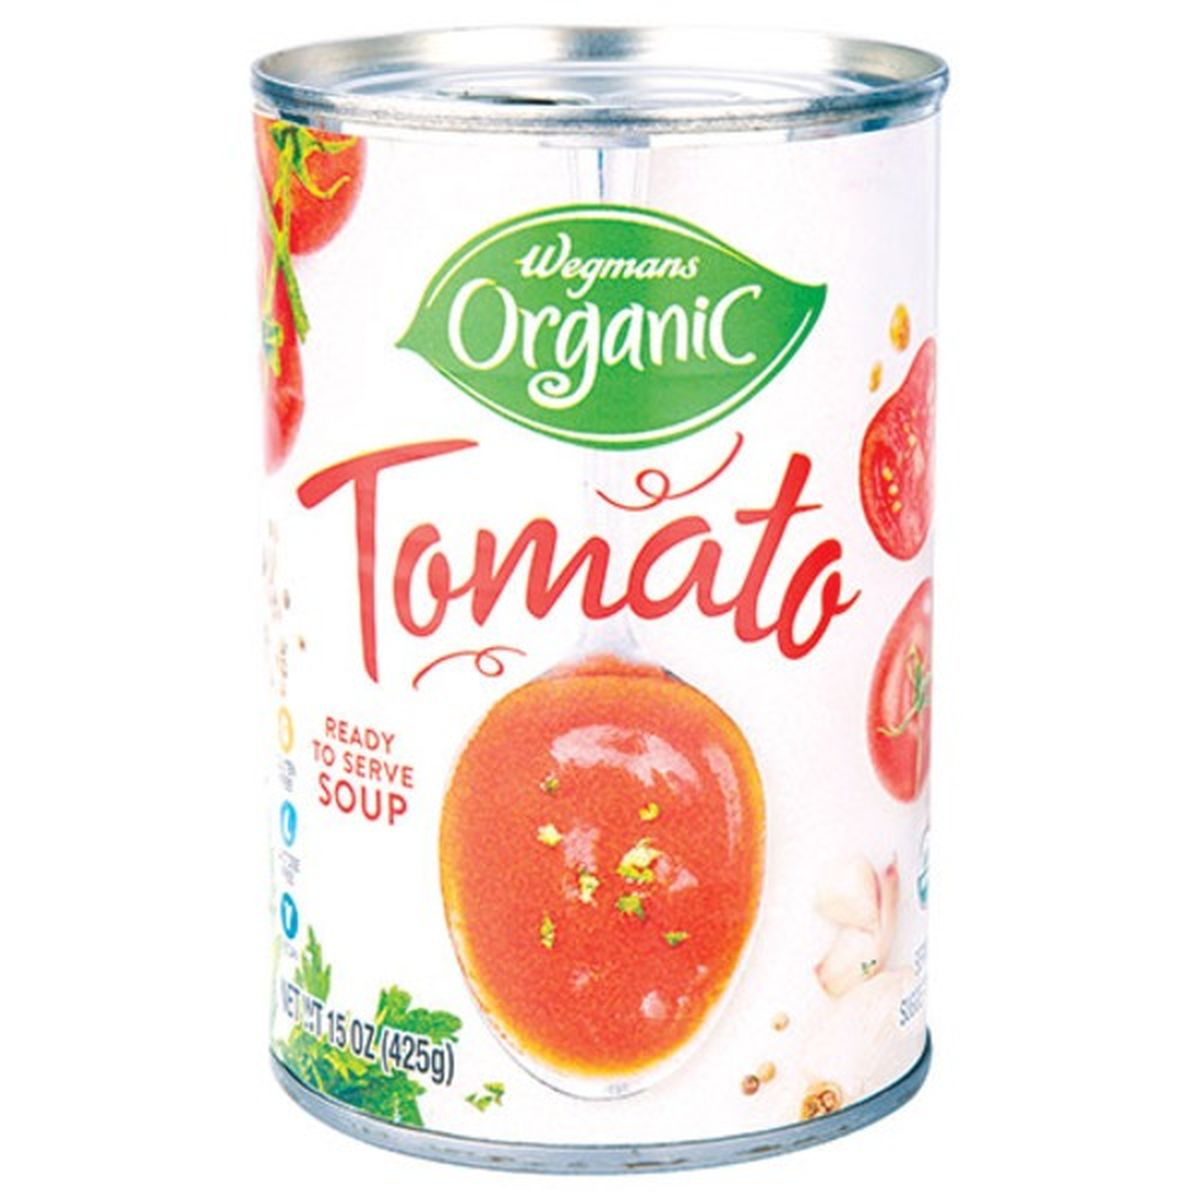 Calories in Wegmans Organic Tomato Soup